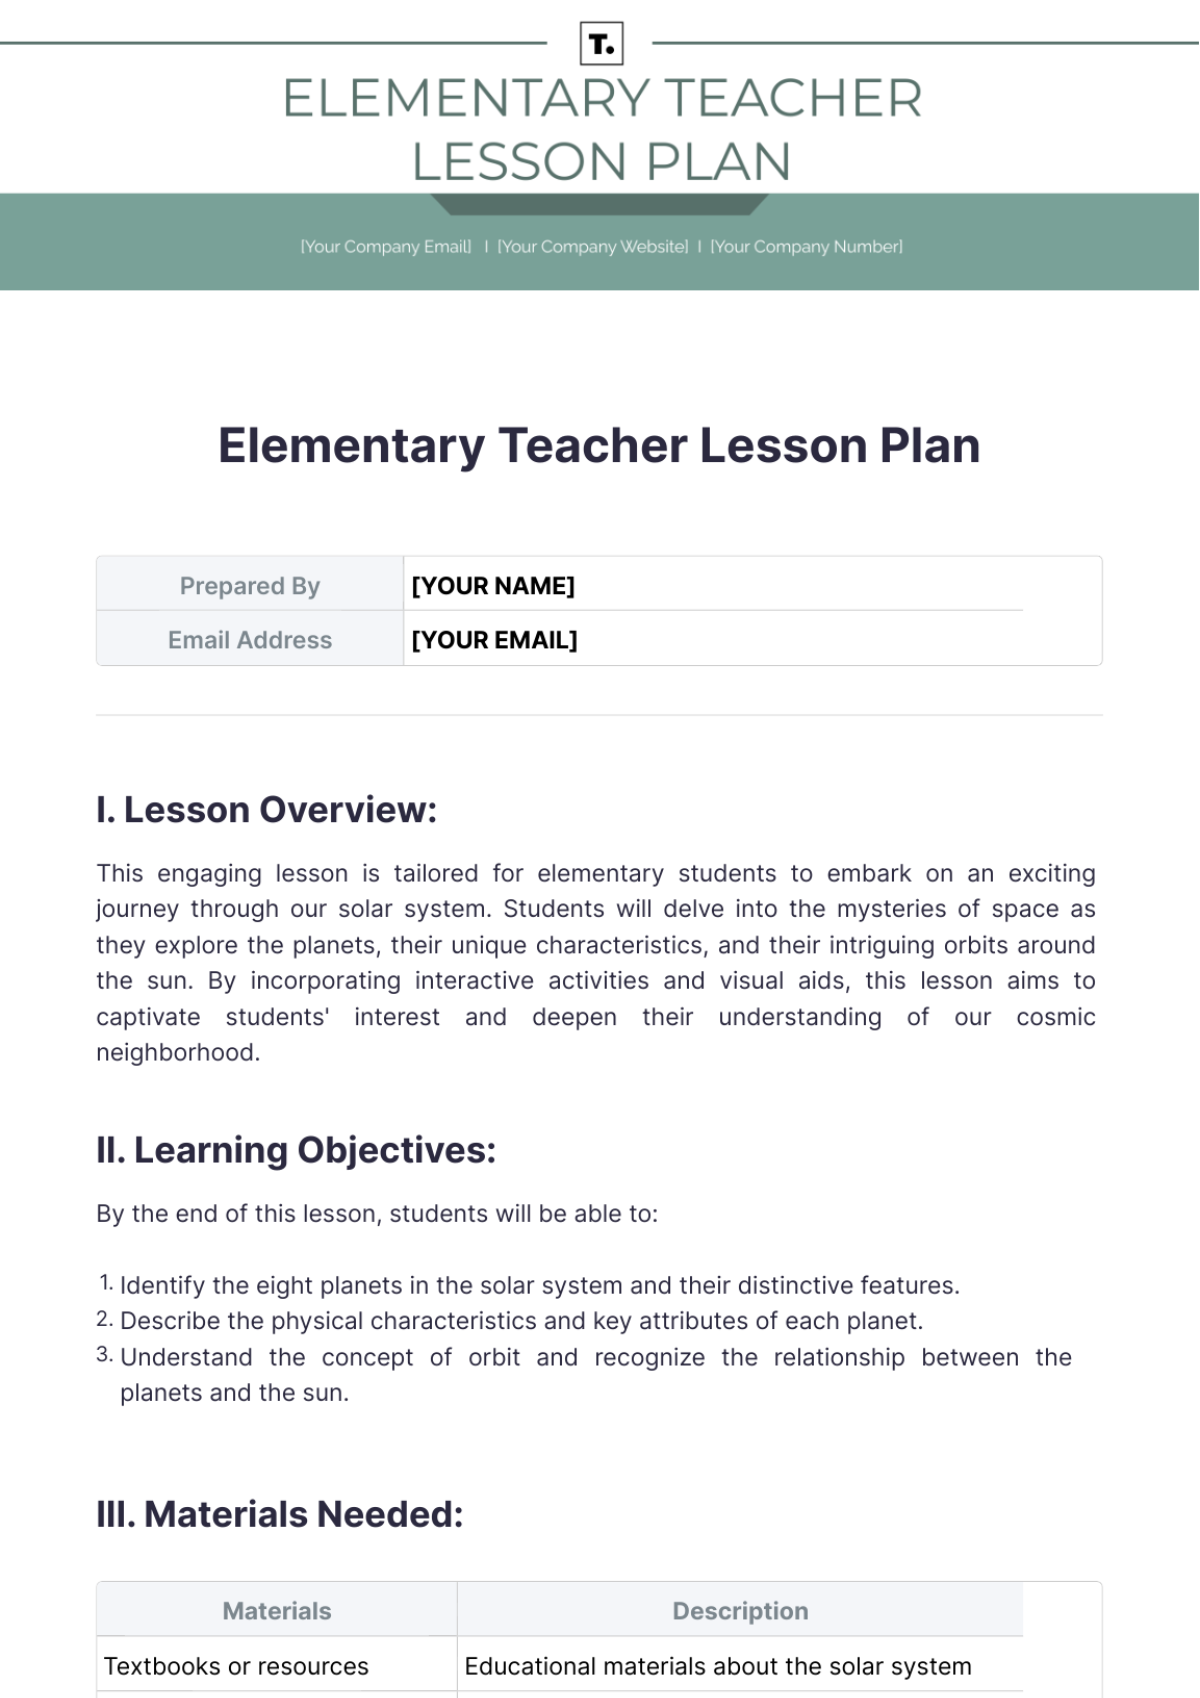 Free Elementary Teacher Lesson Plan Template